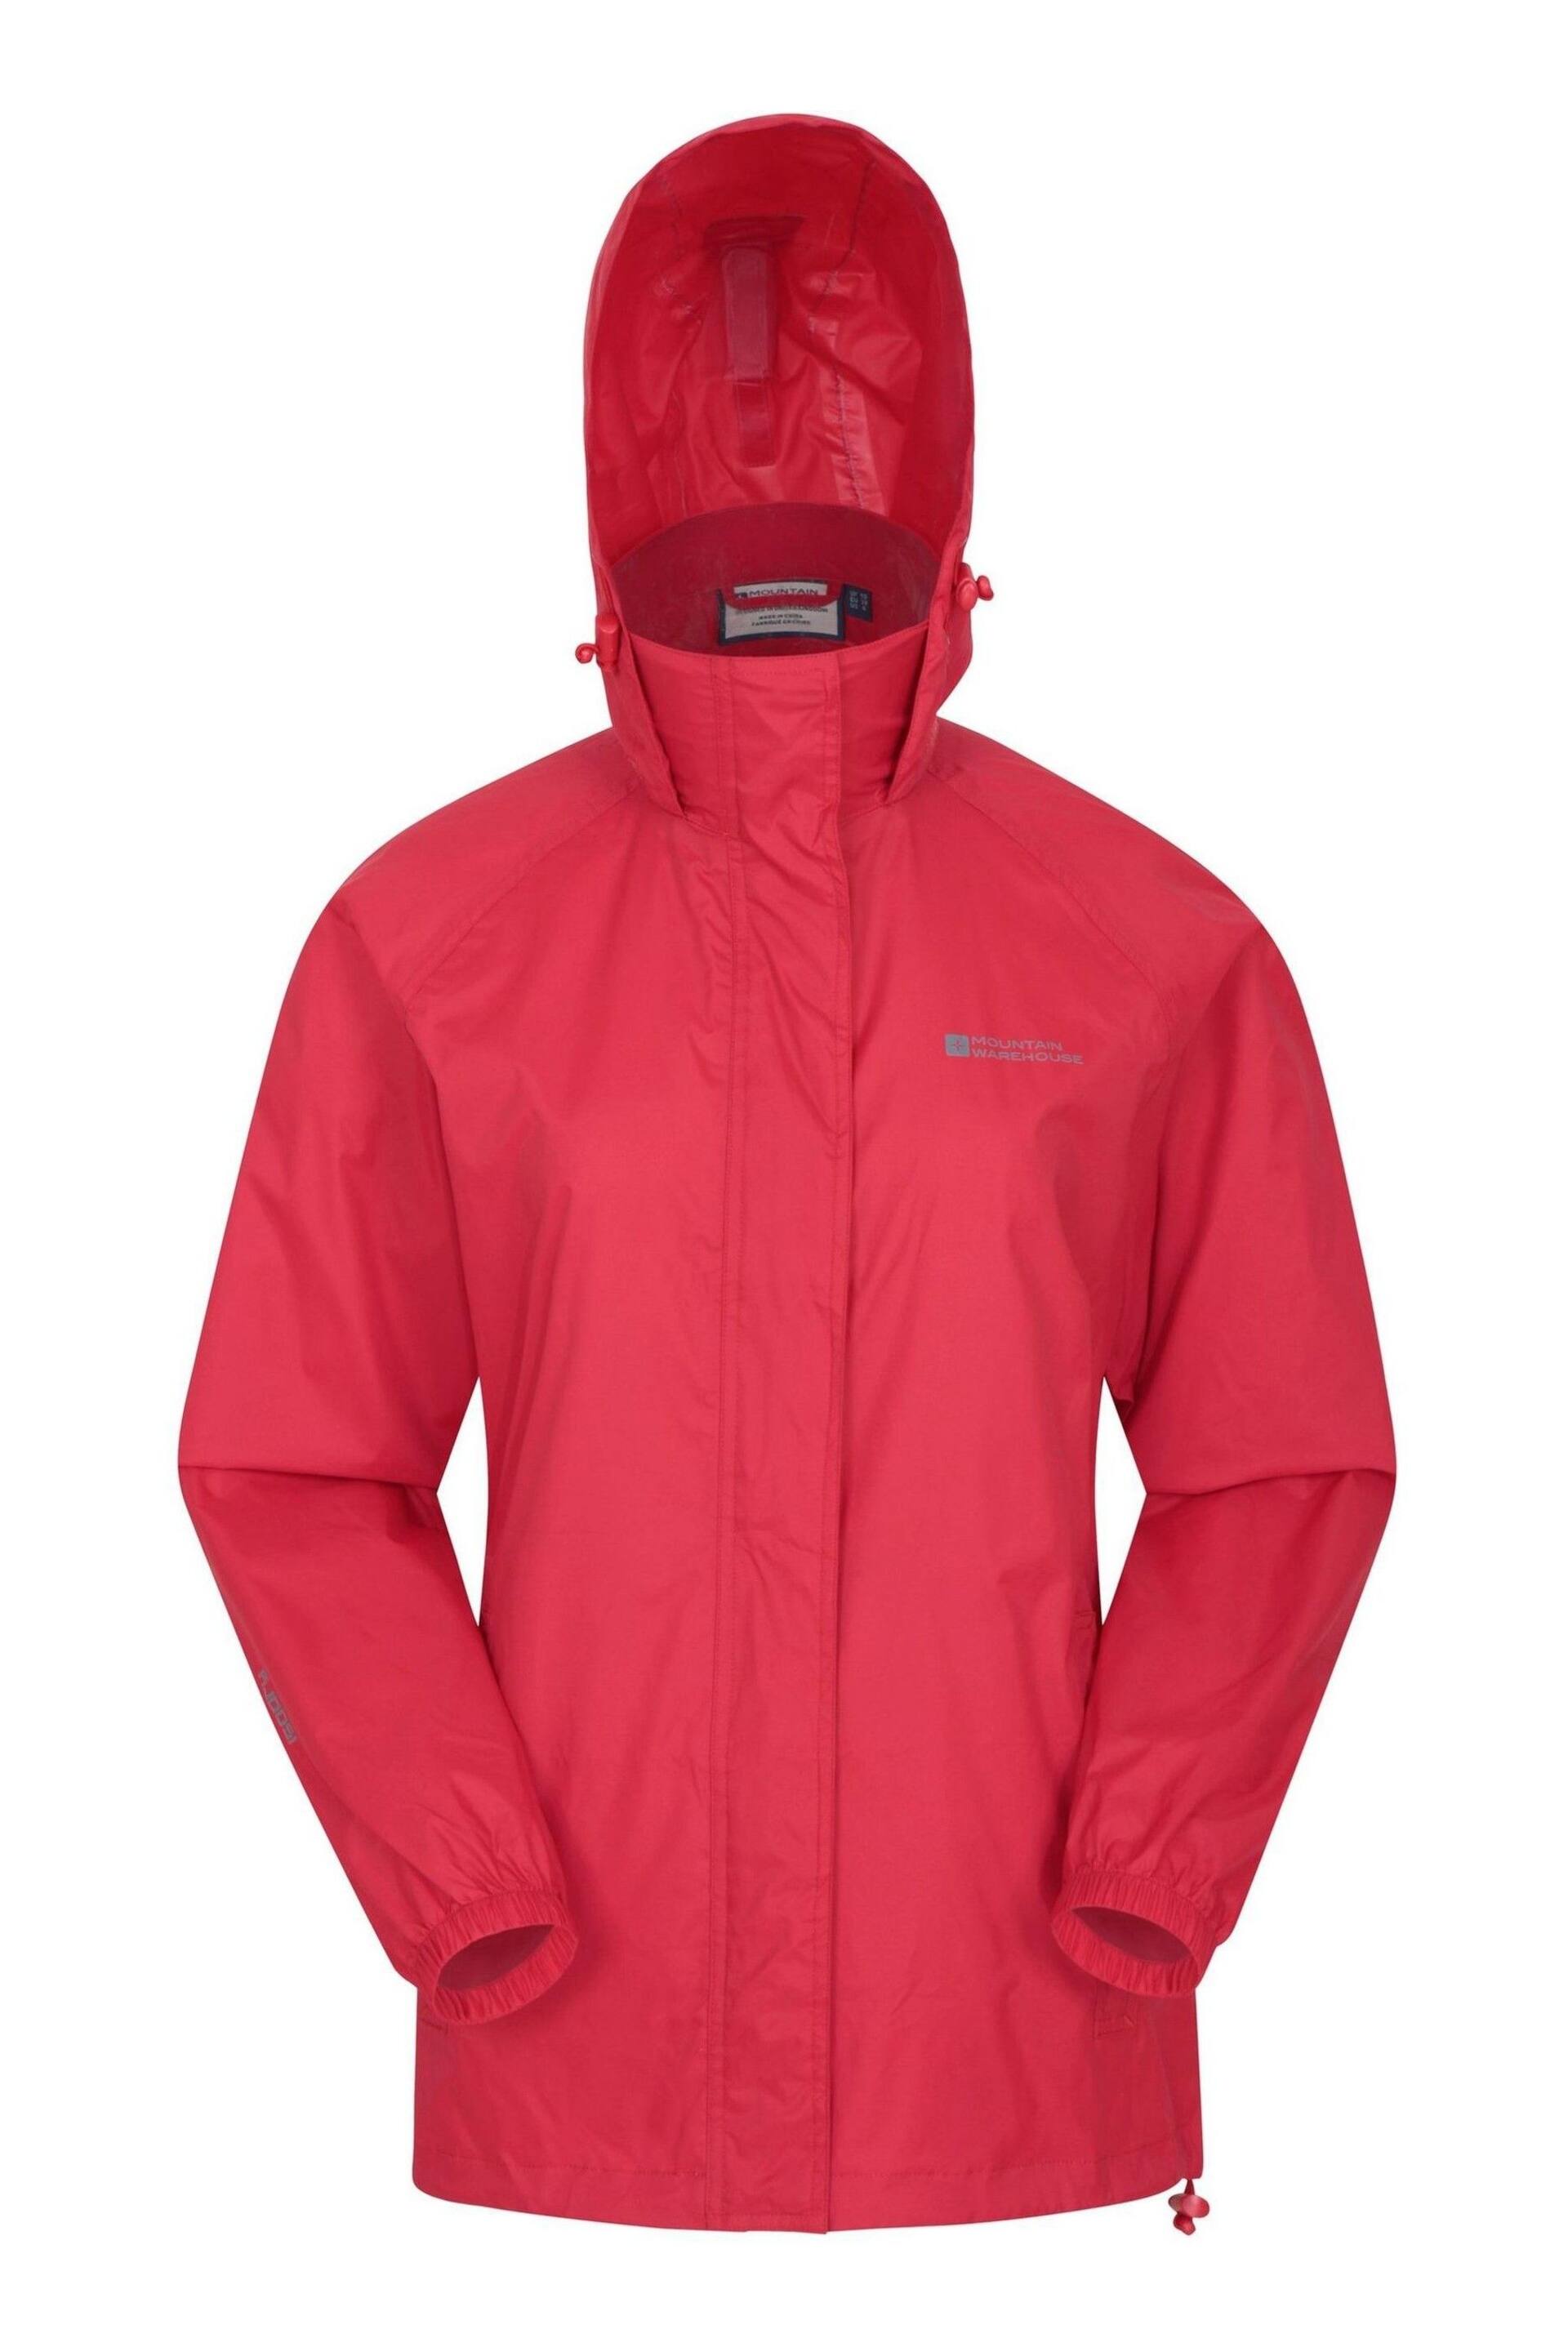 Mountain Warehouse Red Womens Pakka Waterproof Jacket - Image 1 of 5